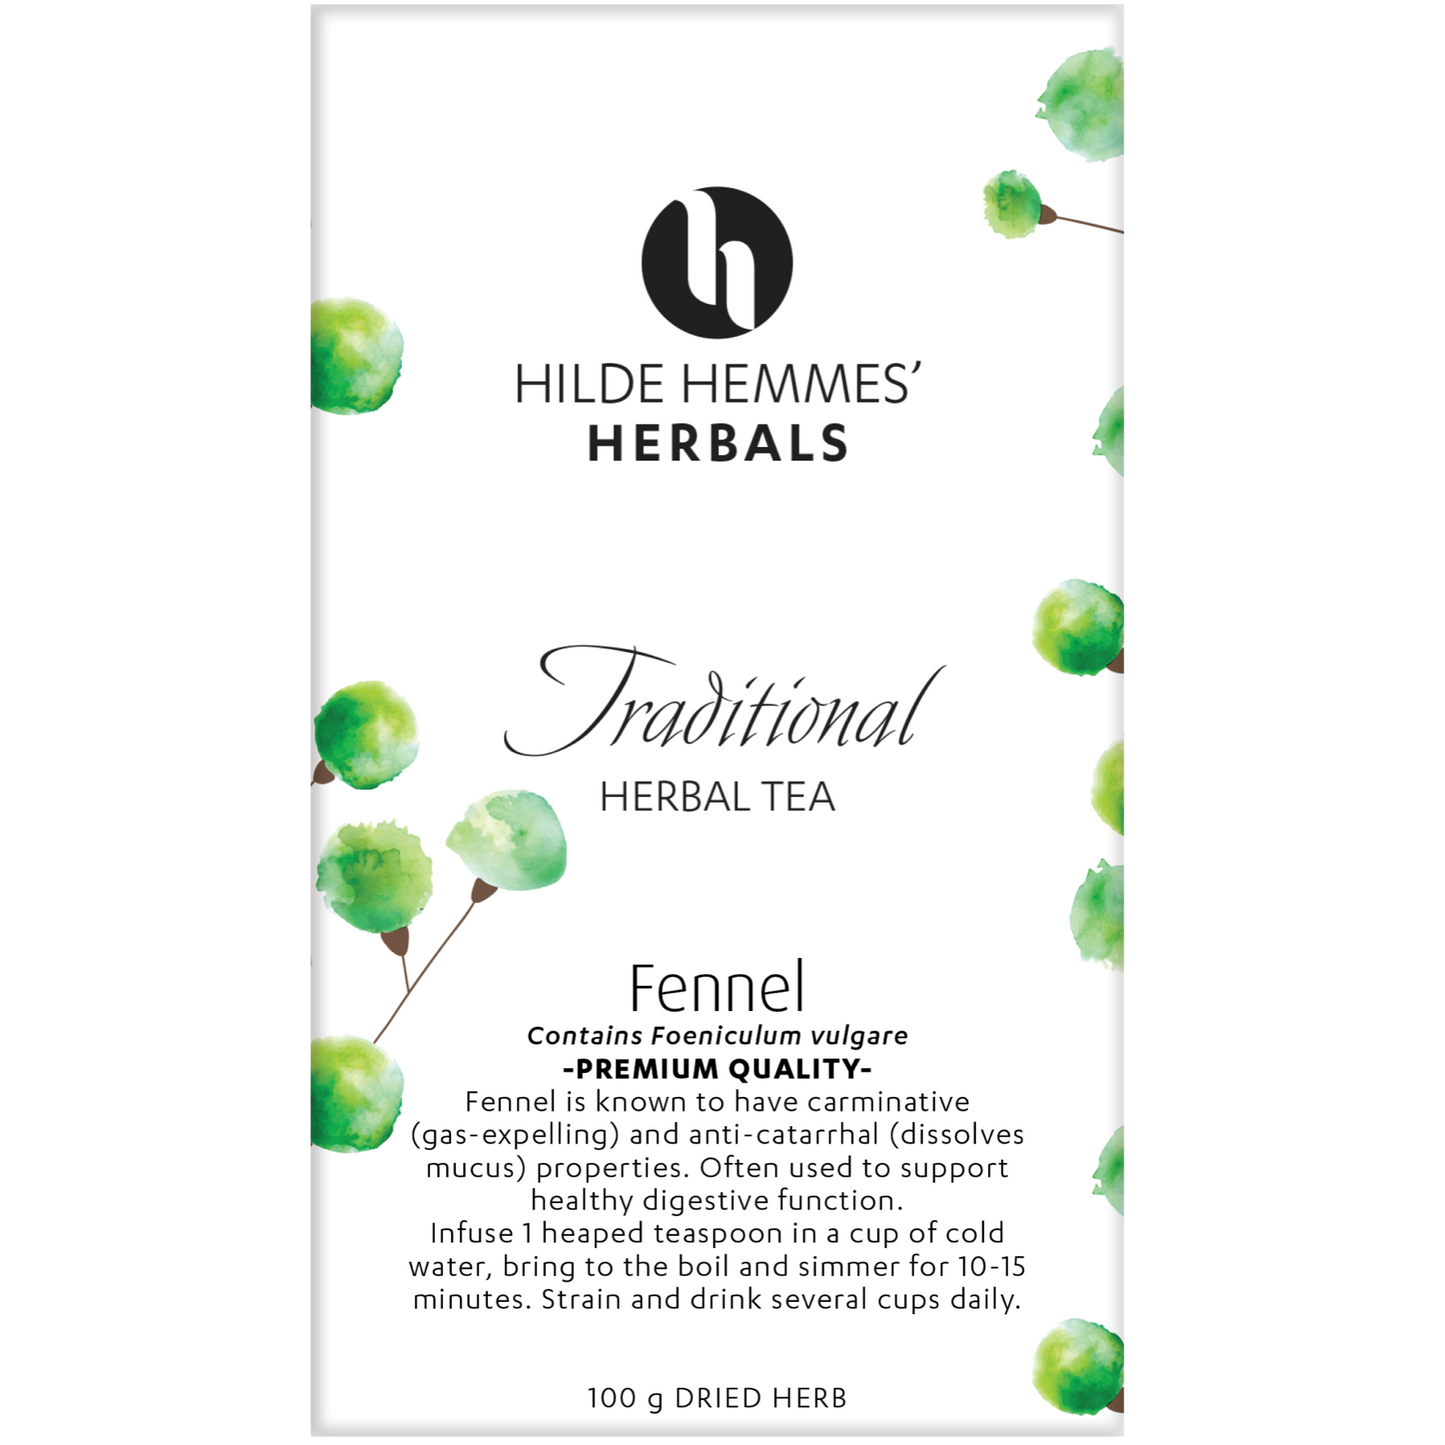 Hilde Hemmes Herbal's Tea 100g, Fennel (Loose Leaf)